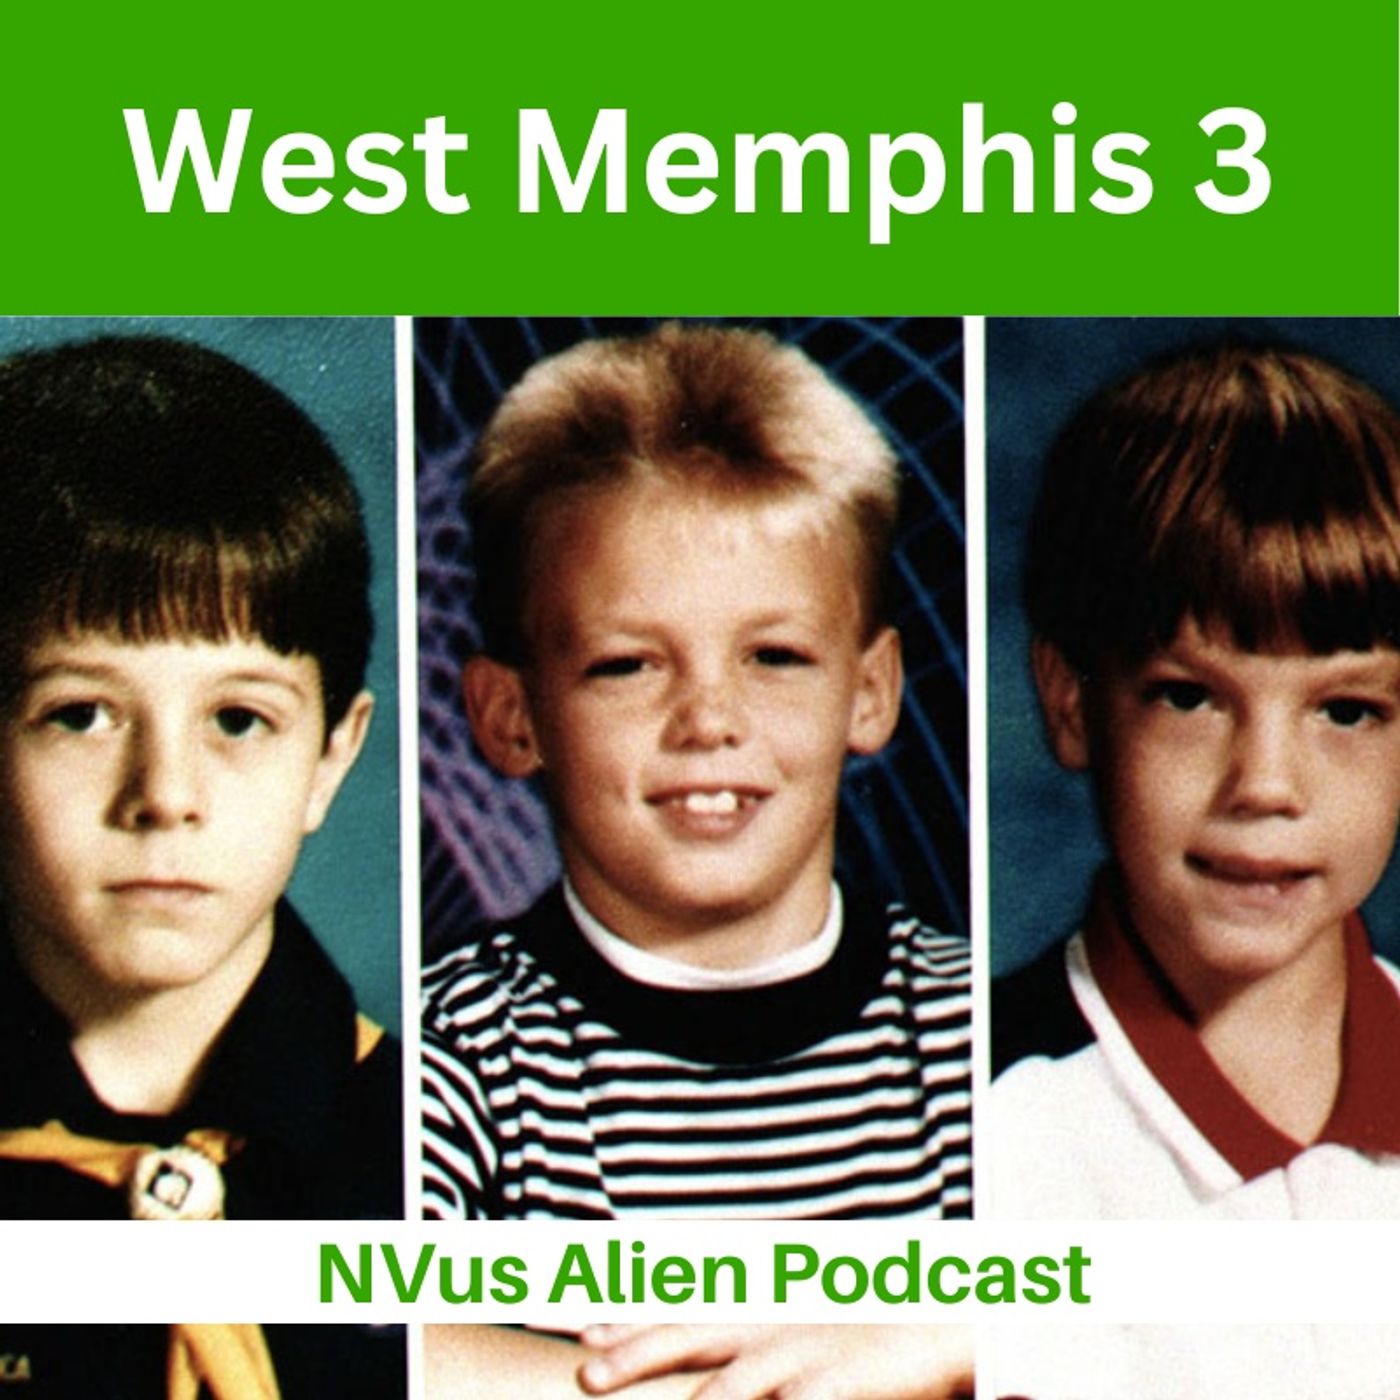 The Strange Case of the West Memphis Three